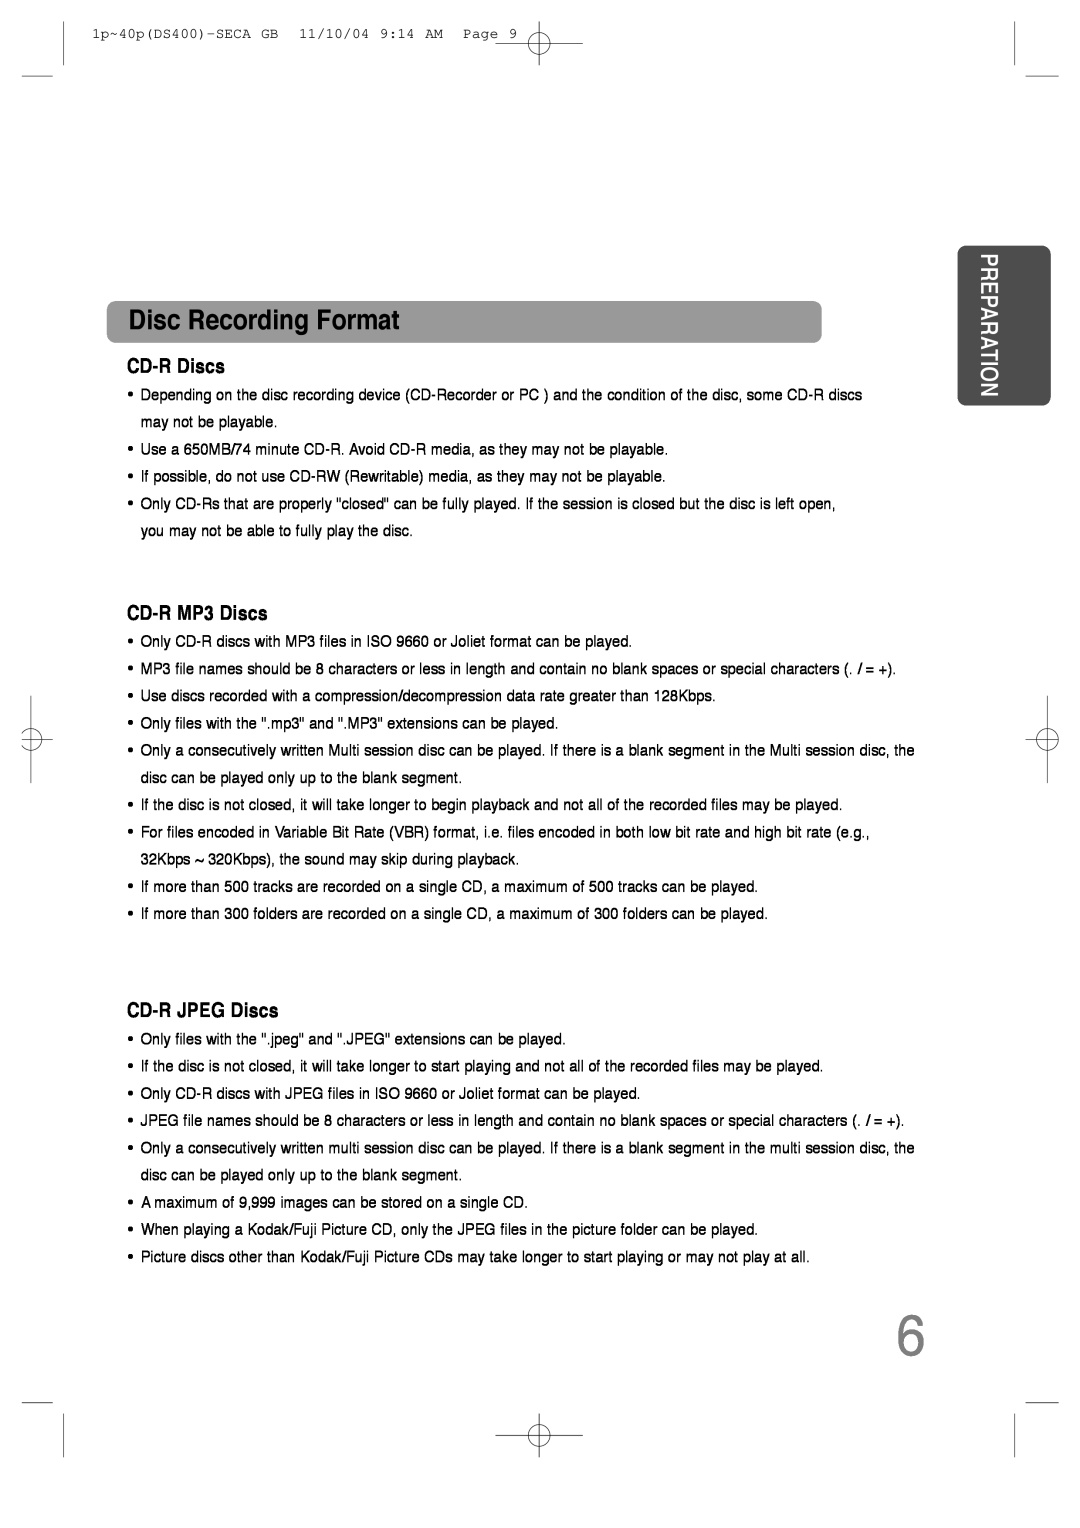 Samsung HT-DS400 instruction manual Disc Recording Format, CD-RDiscs, CD-RMP3 Discs, CD-RJPEG Discs, Preparation 